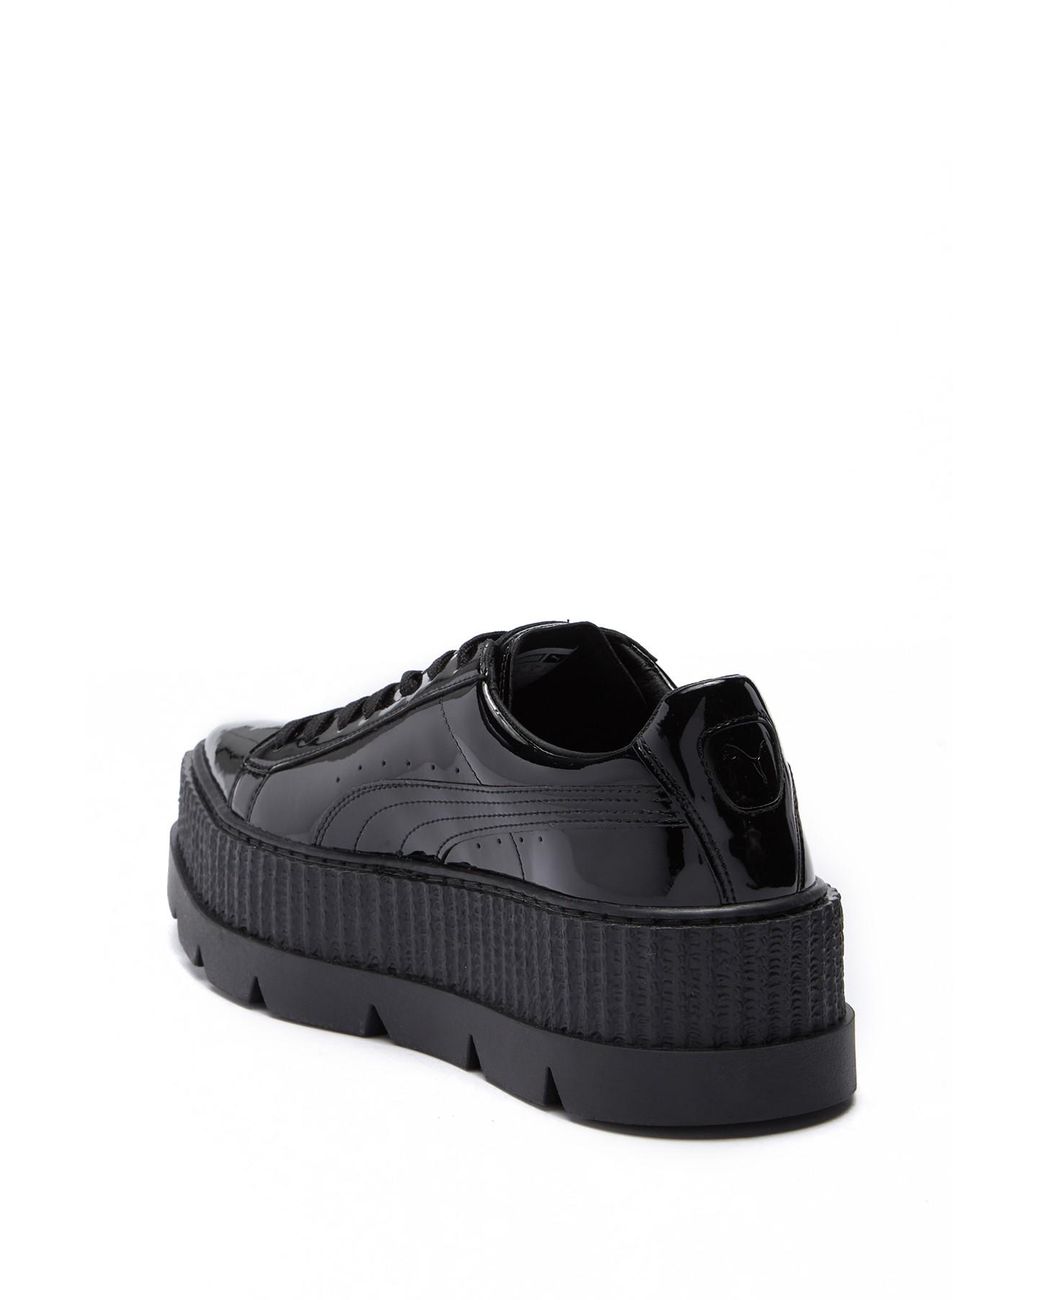 PUMA Fenty By Rihanna Pointed Toe Creeper Patent Platform Sneaker in Black  | Lyst